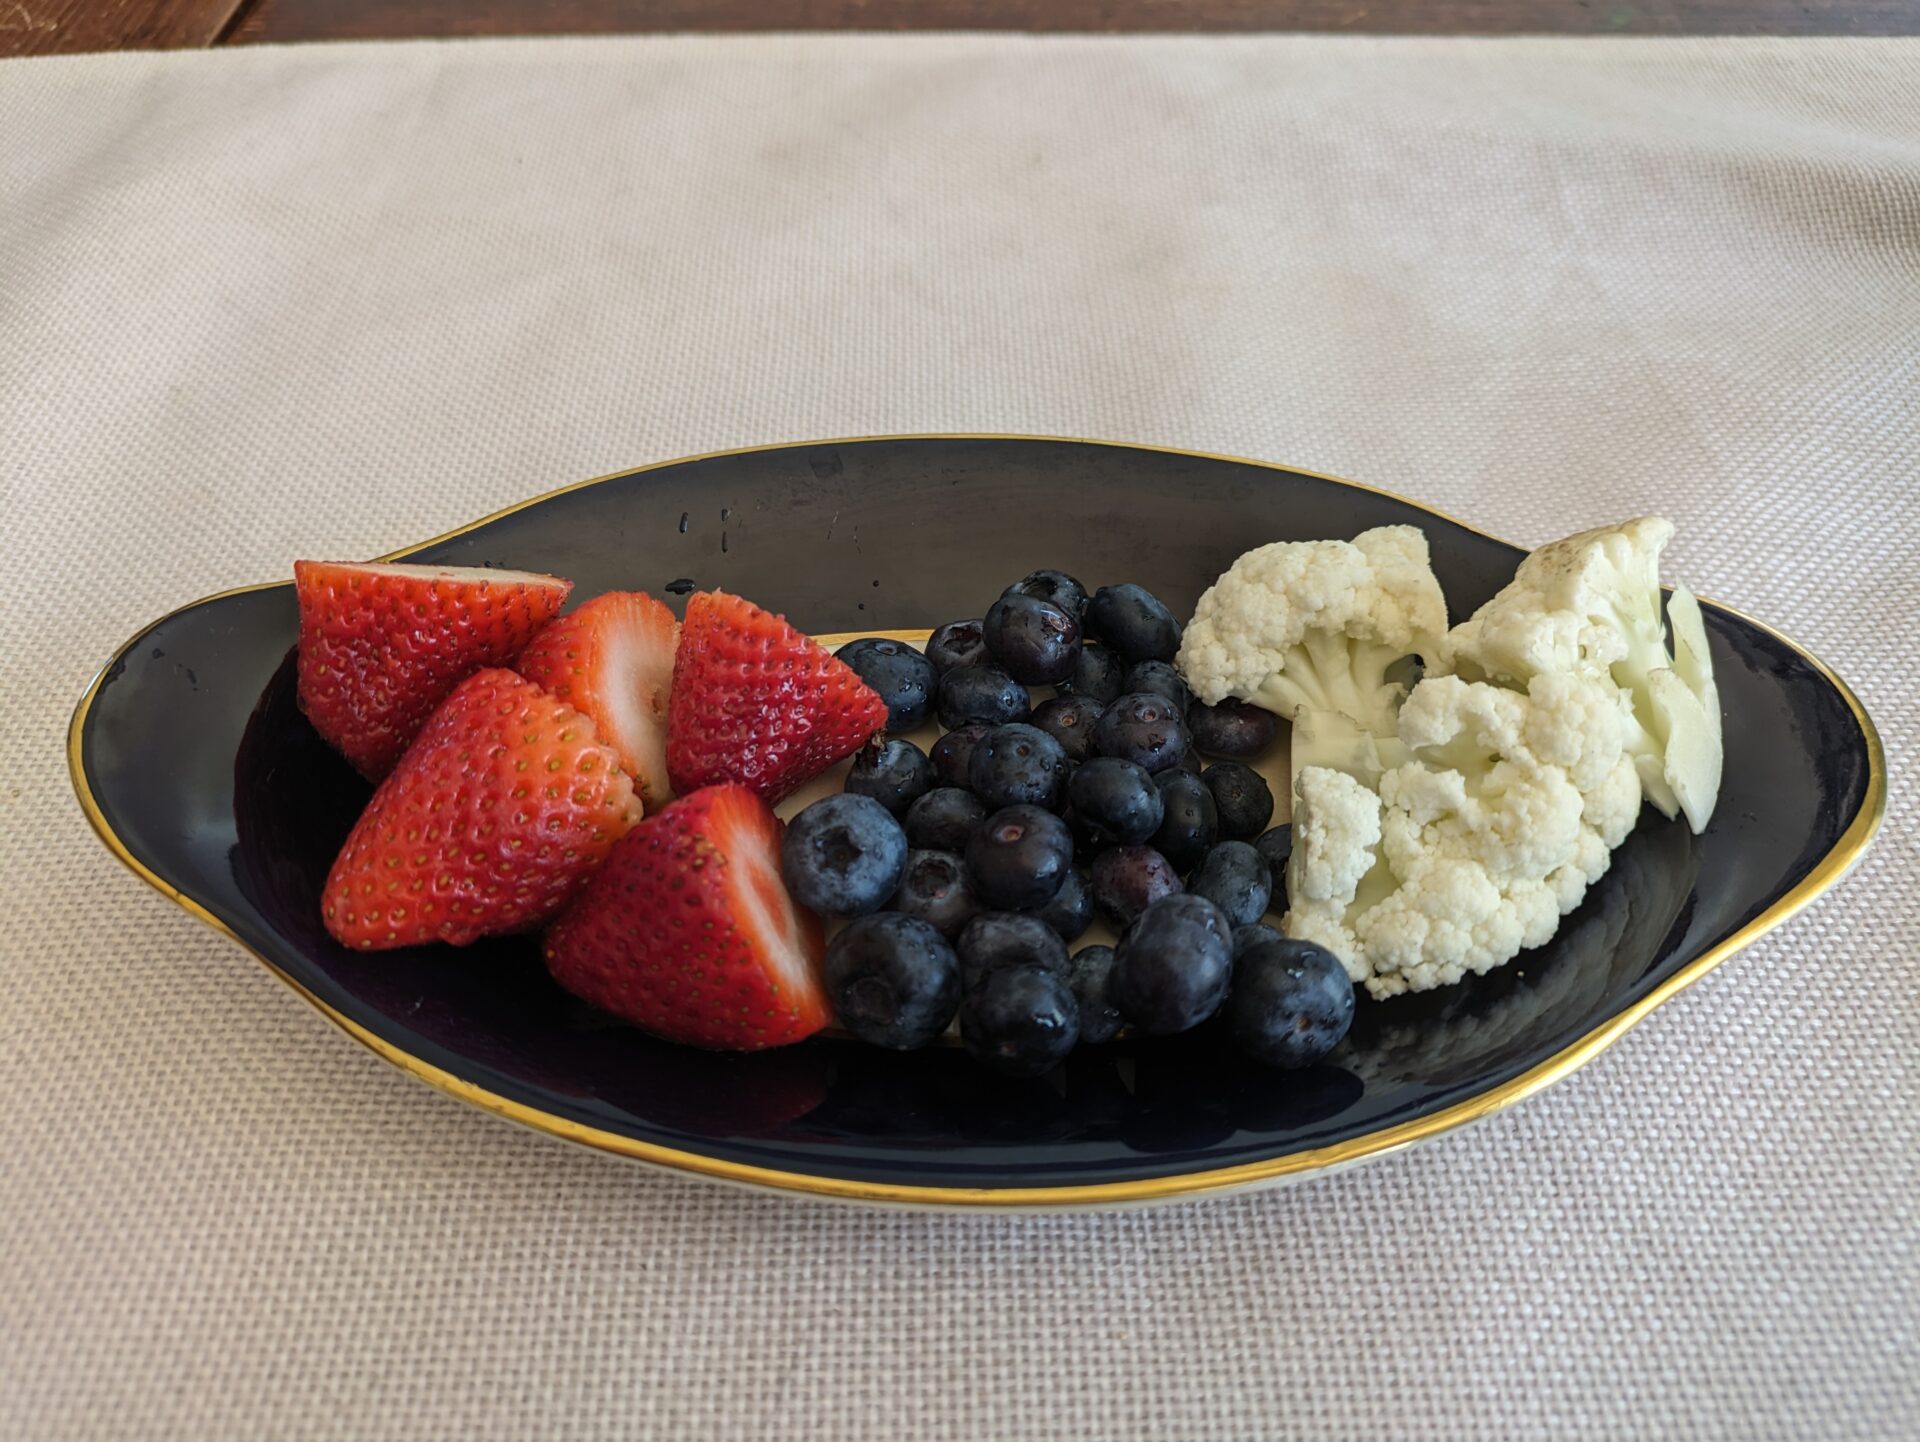 Plate of strawberries, blueberries, and cauliflower